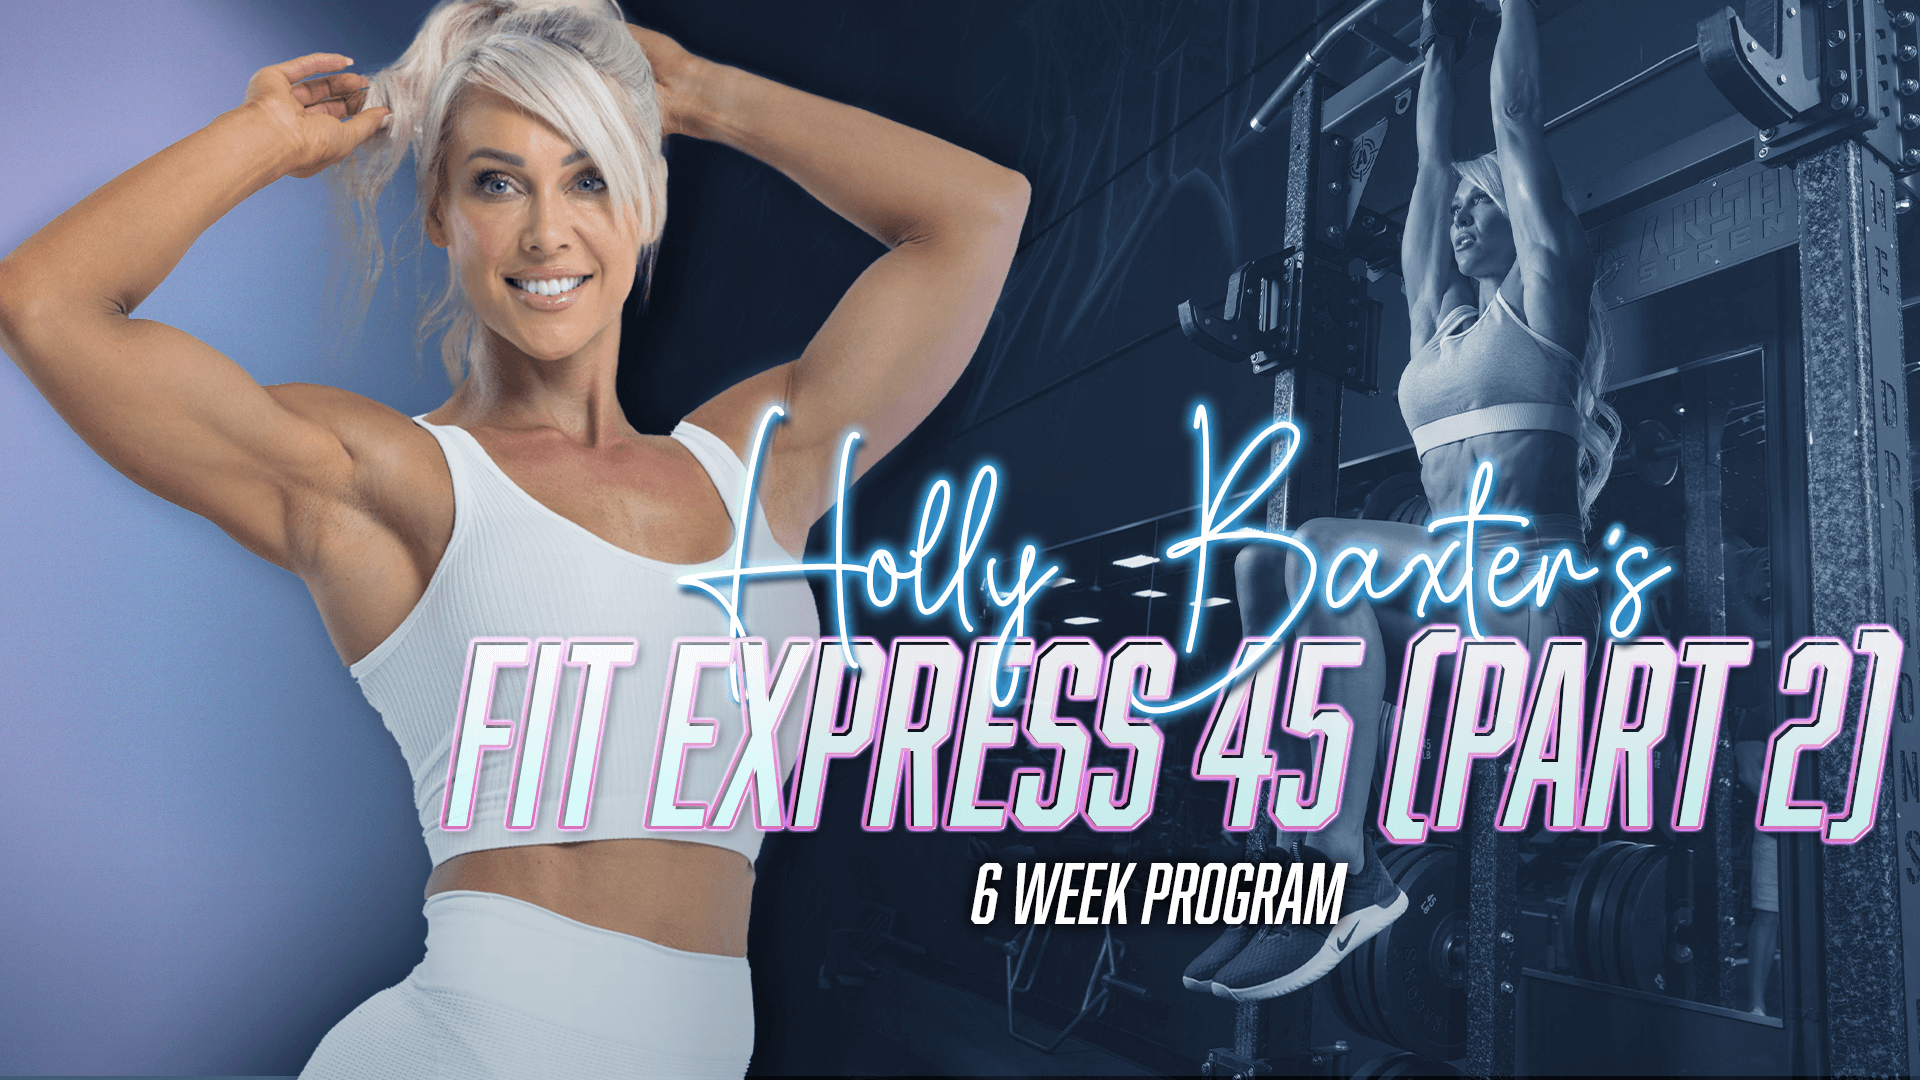 Fit Express 45 - Part 2